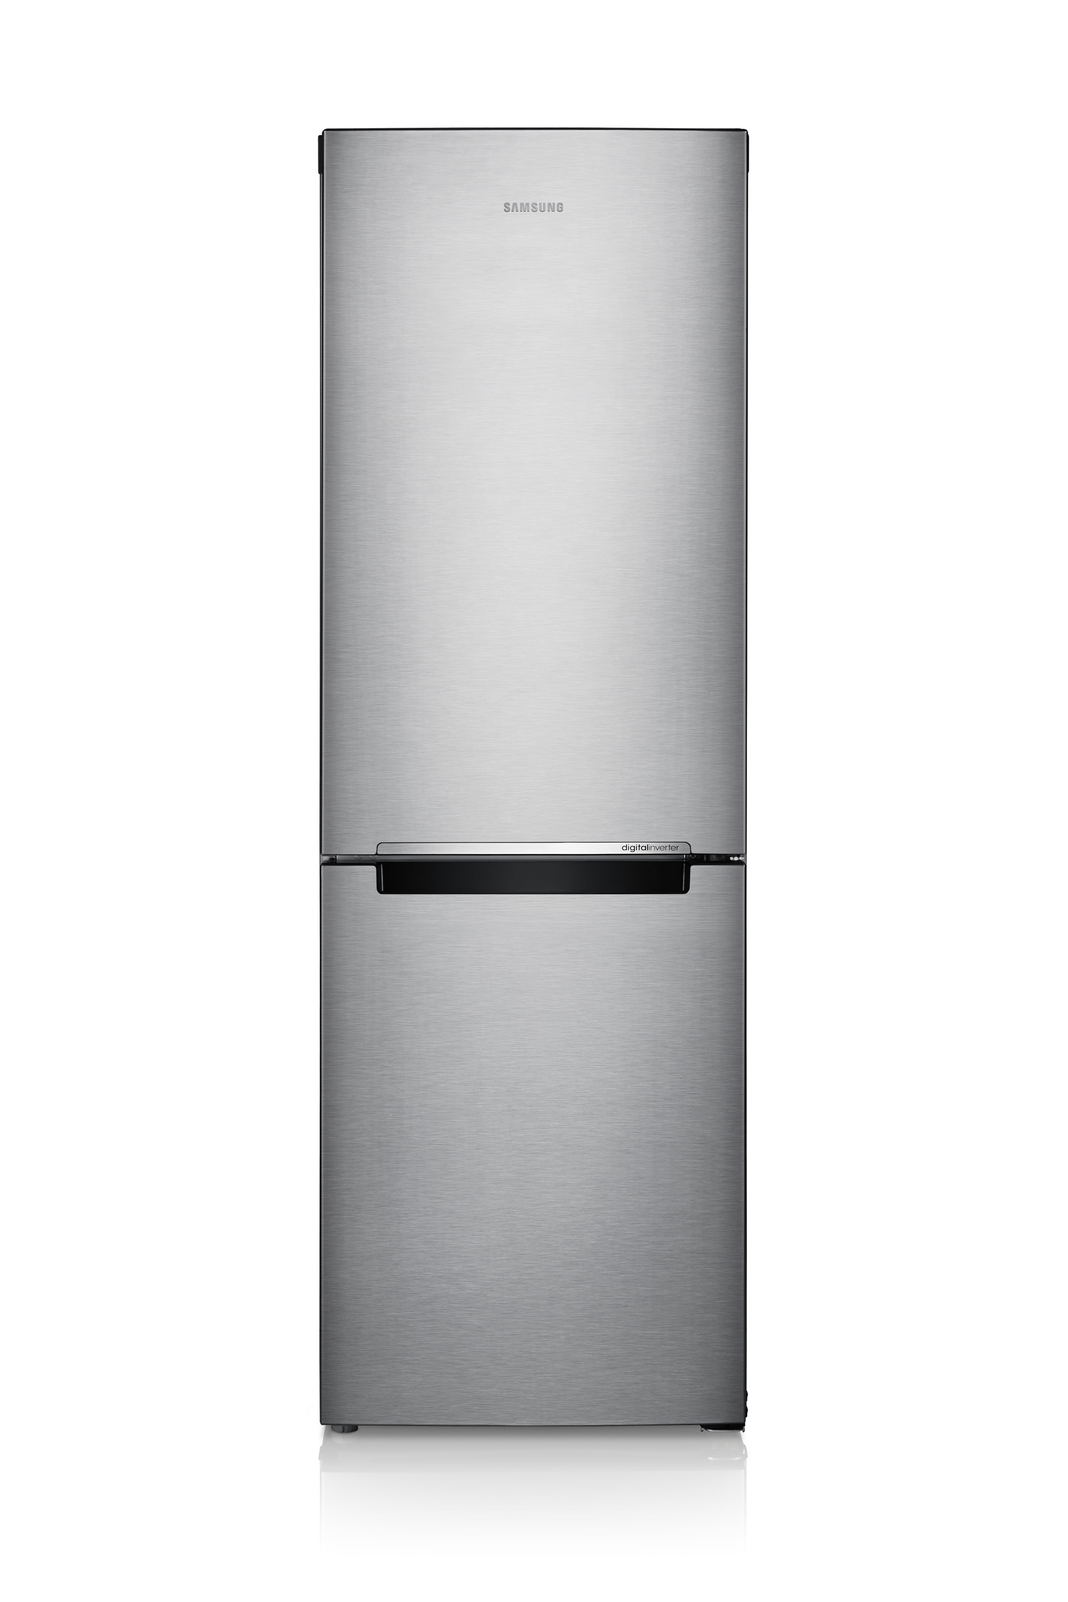 Samsung - 23.4 Inch 10.3 cu. ft Bottom Mount Refrigerator in Stainless - RB10FSR4ESR